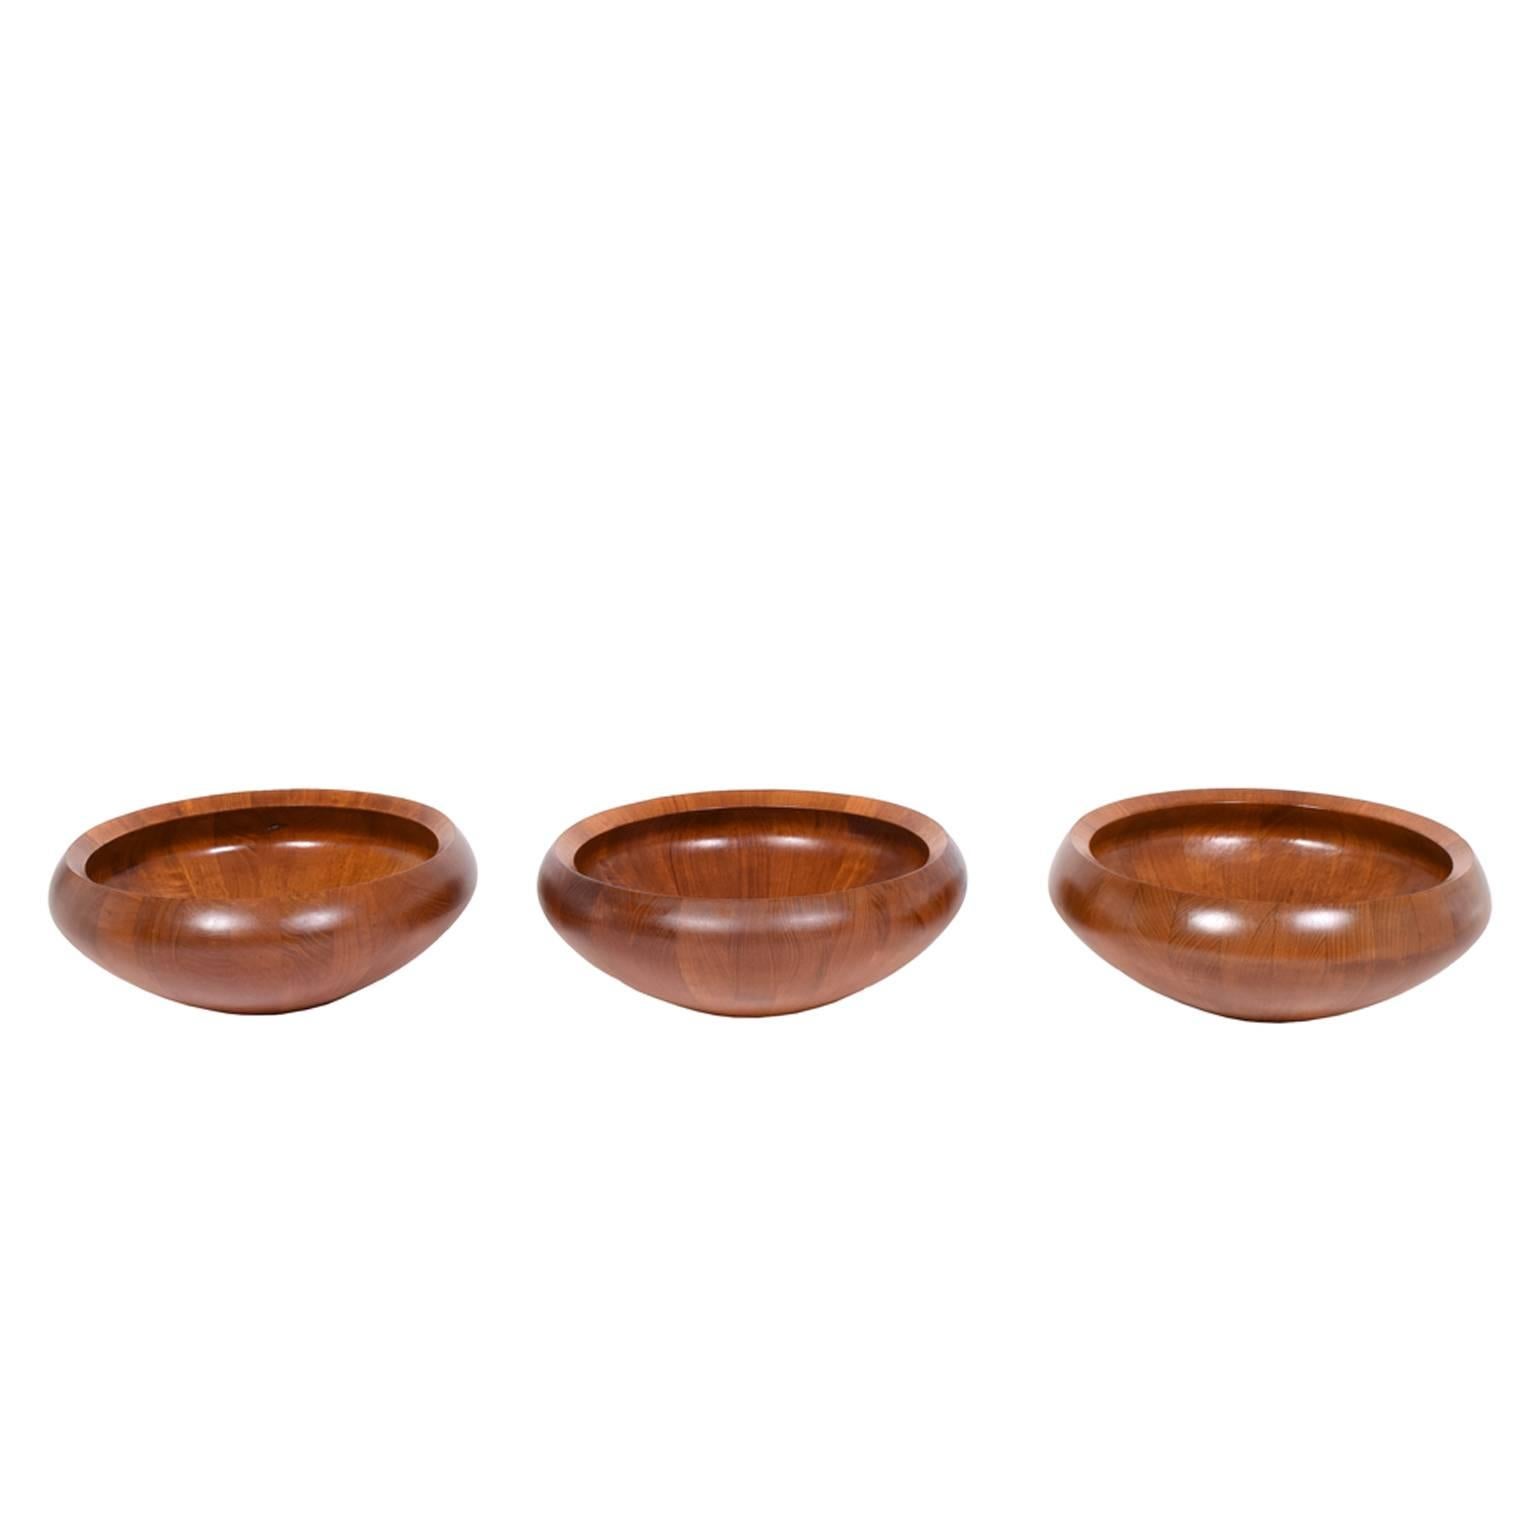 Three solid teak bowls made in butcher block technique, designed by Jens H. Quistgaard for "Dansk". Marked on bottom.